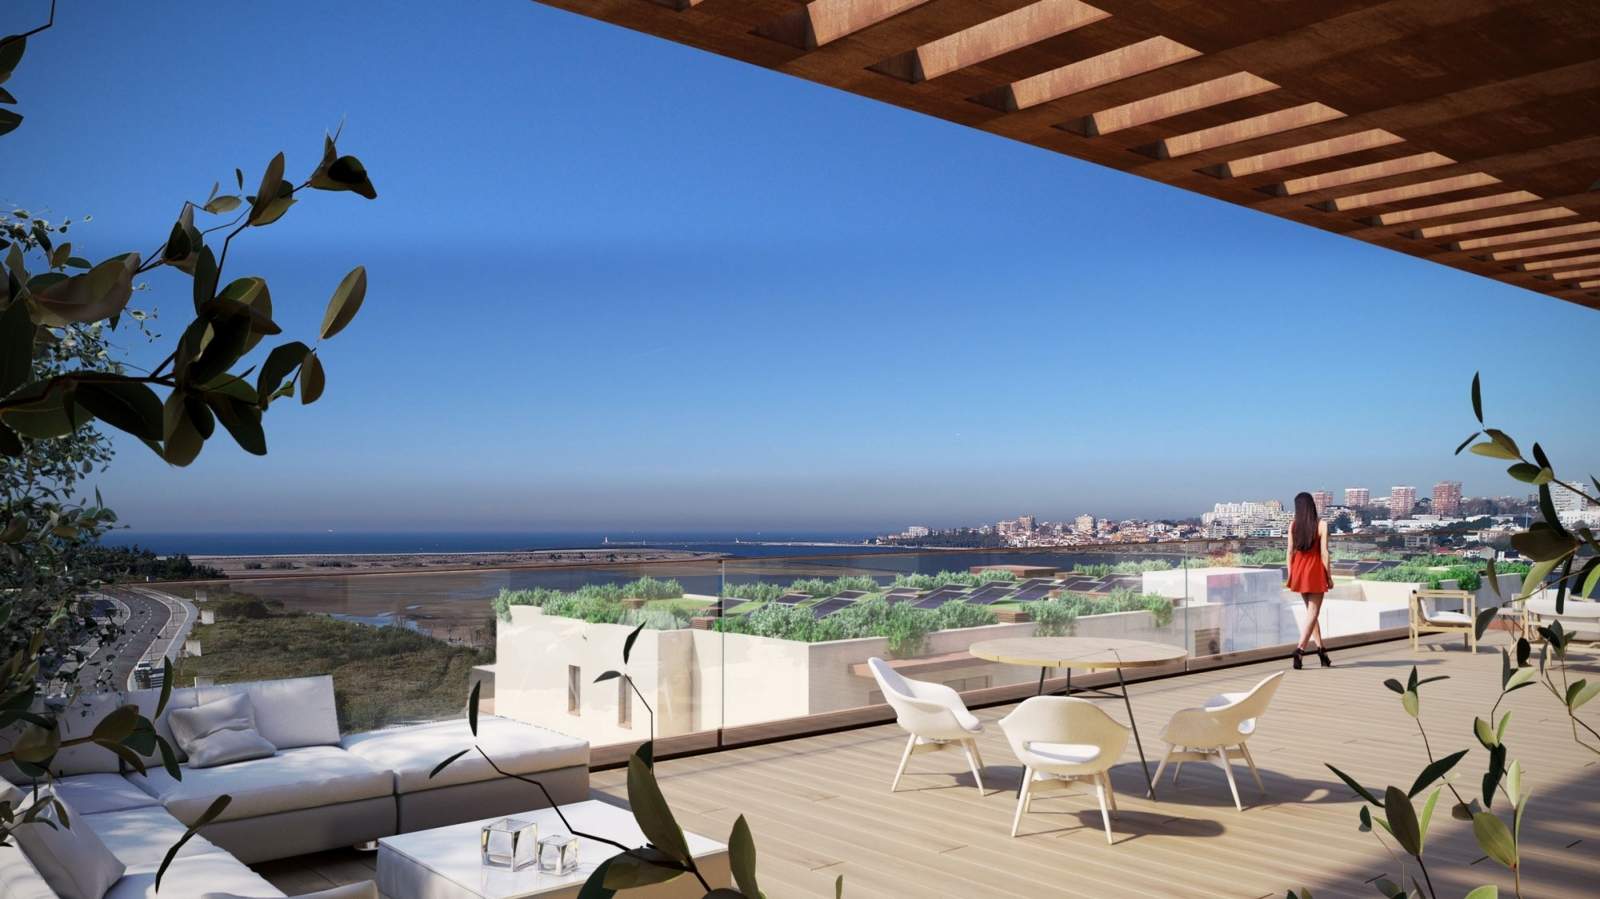 Apartment for sale with terrace, in exclusive condominium, V. N. Gaia, Porto, Portugal_175758